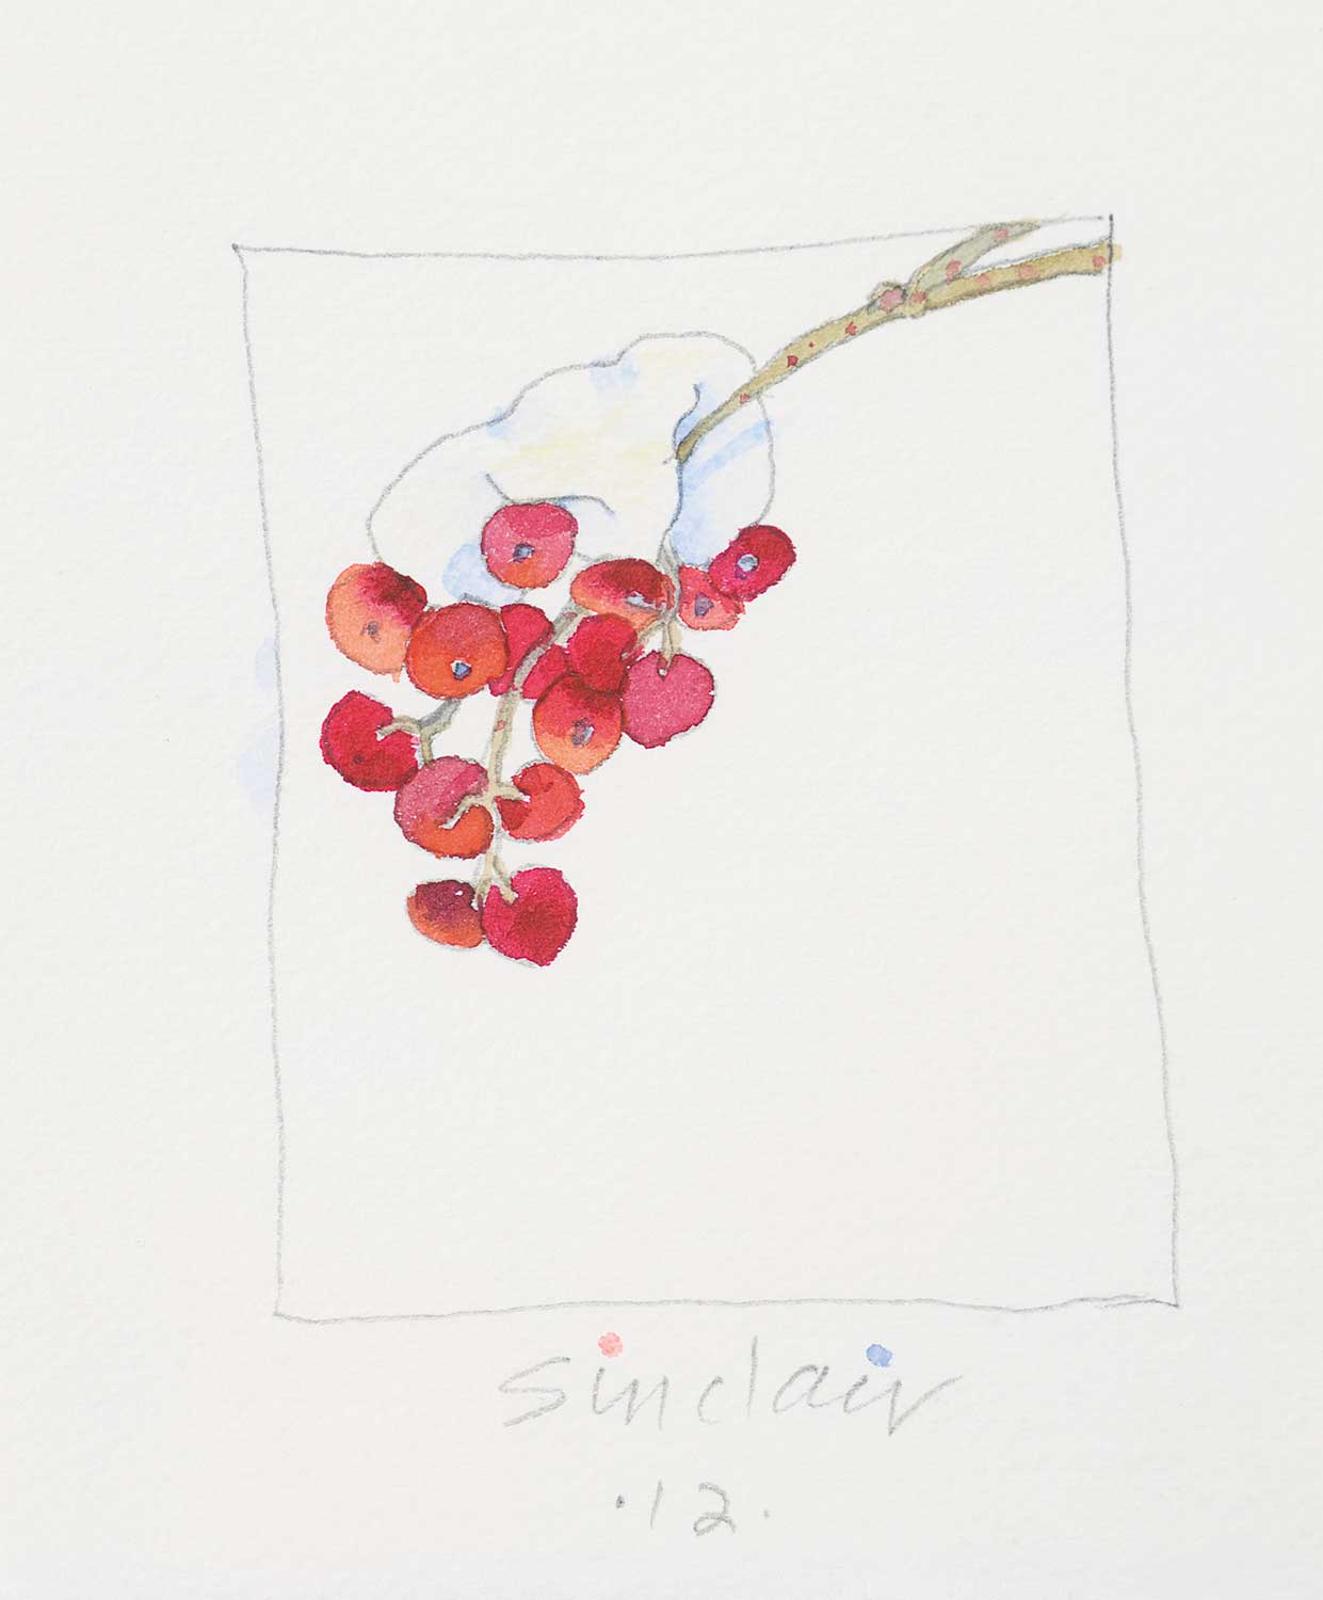 Robert William Sinclair (1939) - Single Drop, Snow Mountain Ash Berries